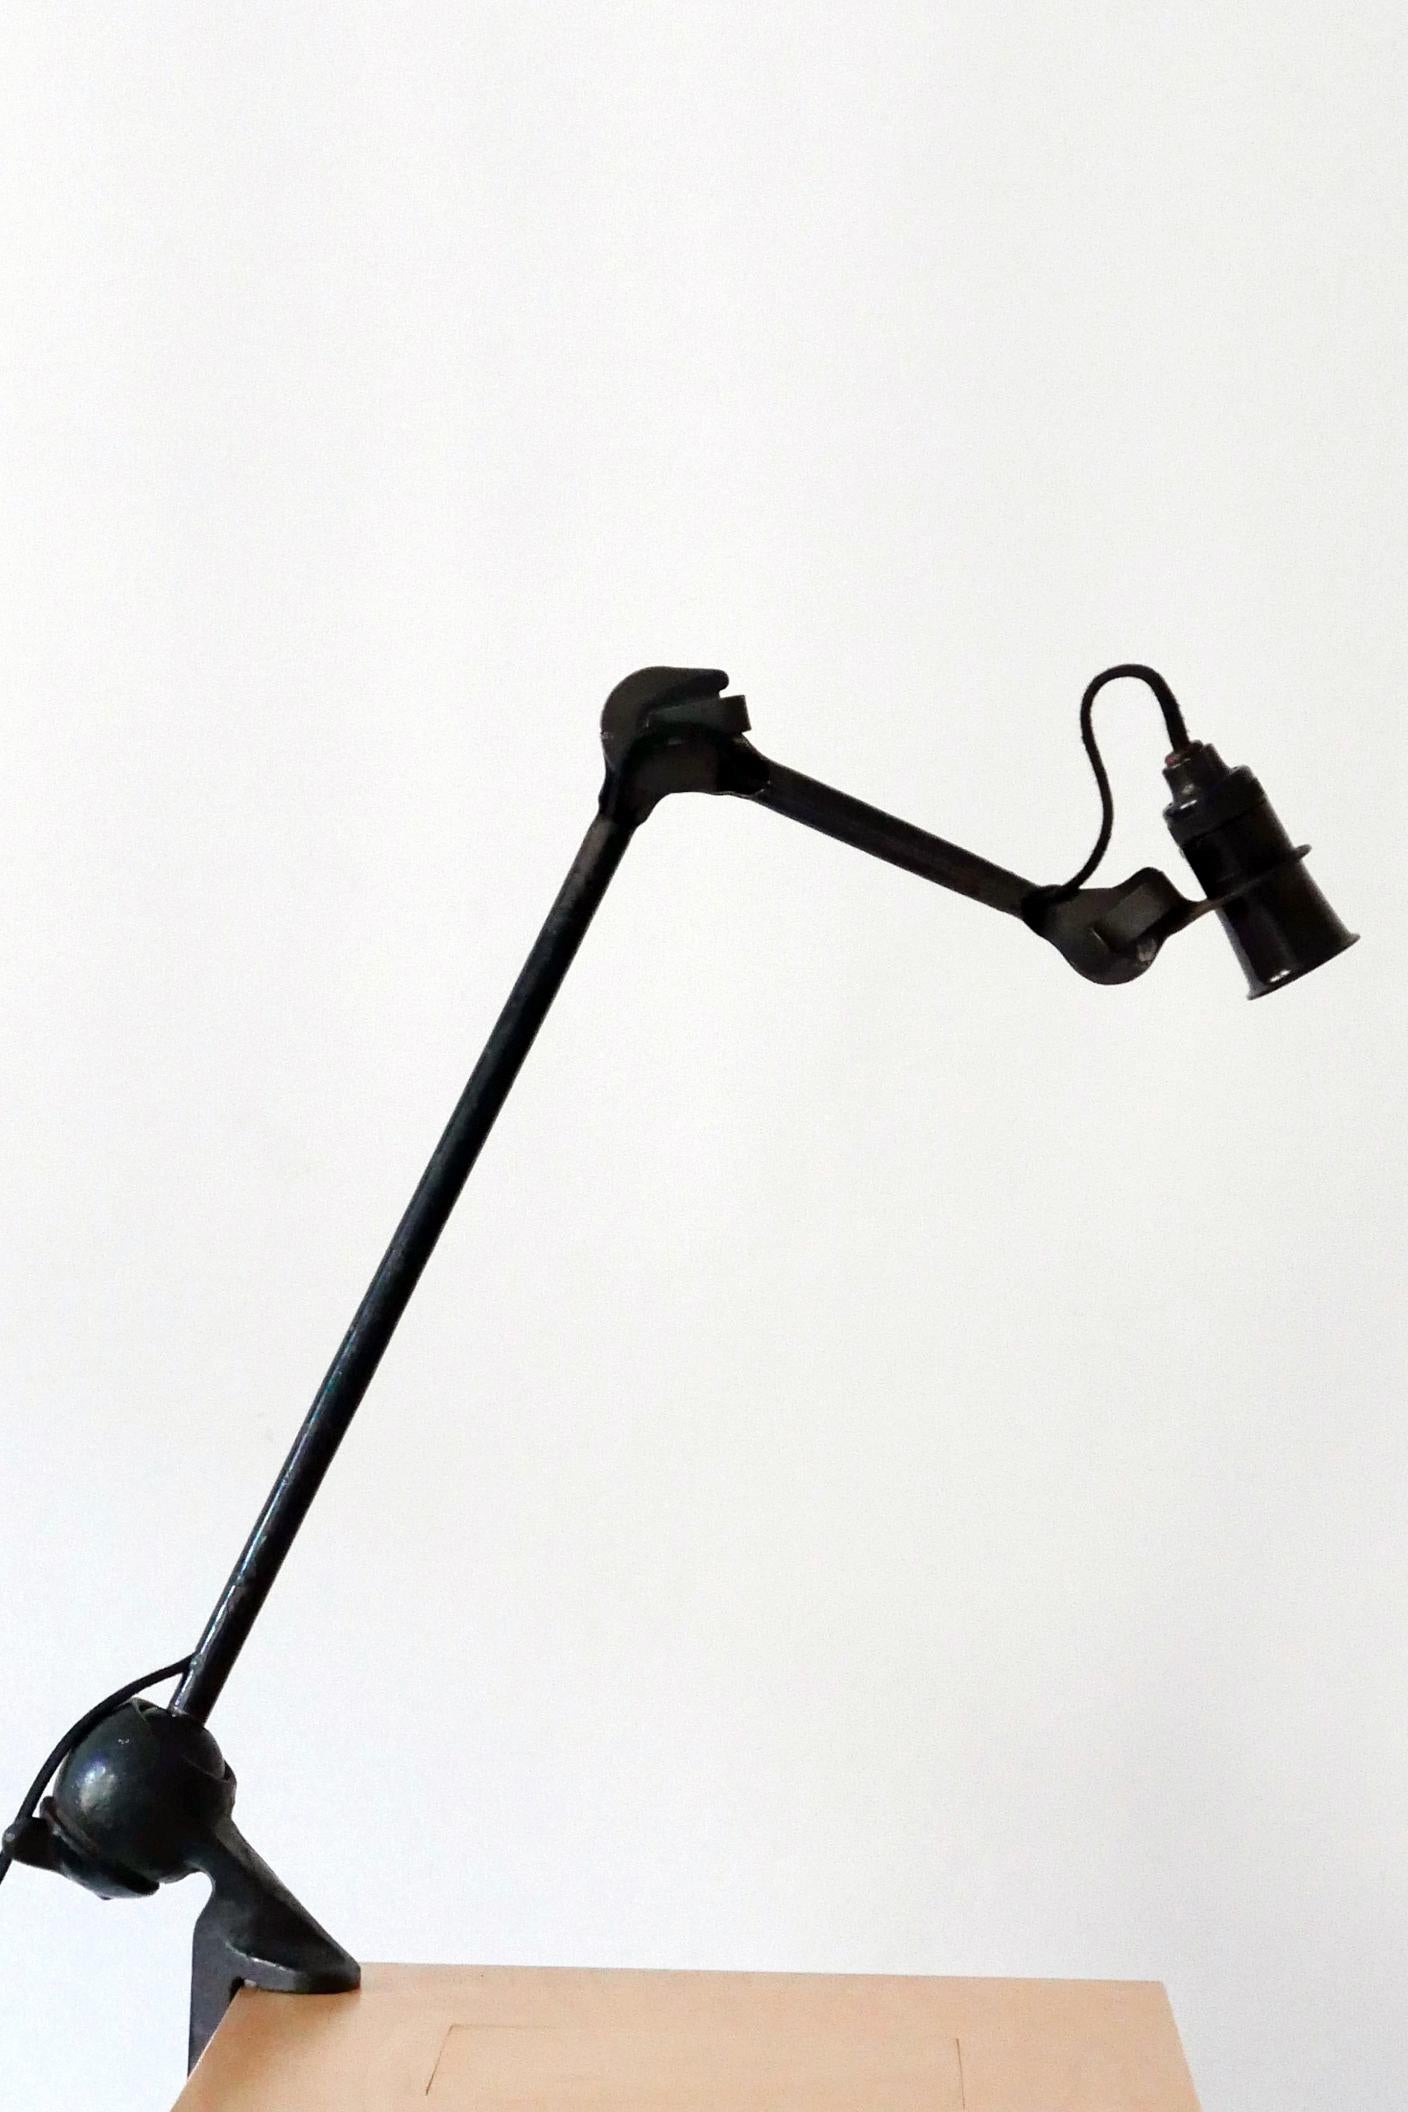 Early 20th Century Modernist Task Light or Clamp Table Lamp by Bernard-Albin Gras for Gras, 1920s For Sale